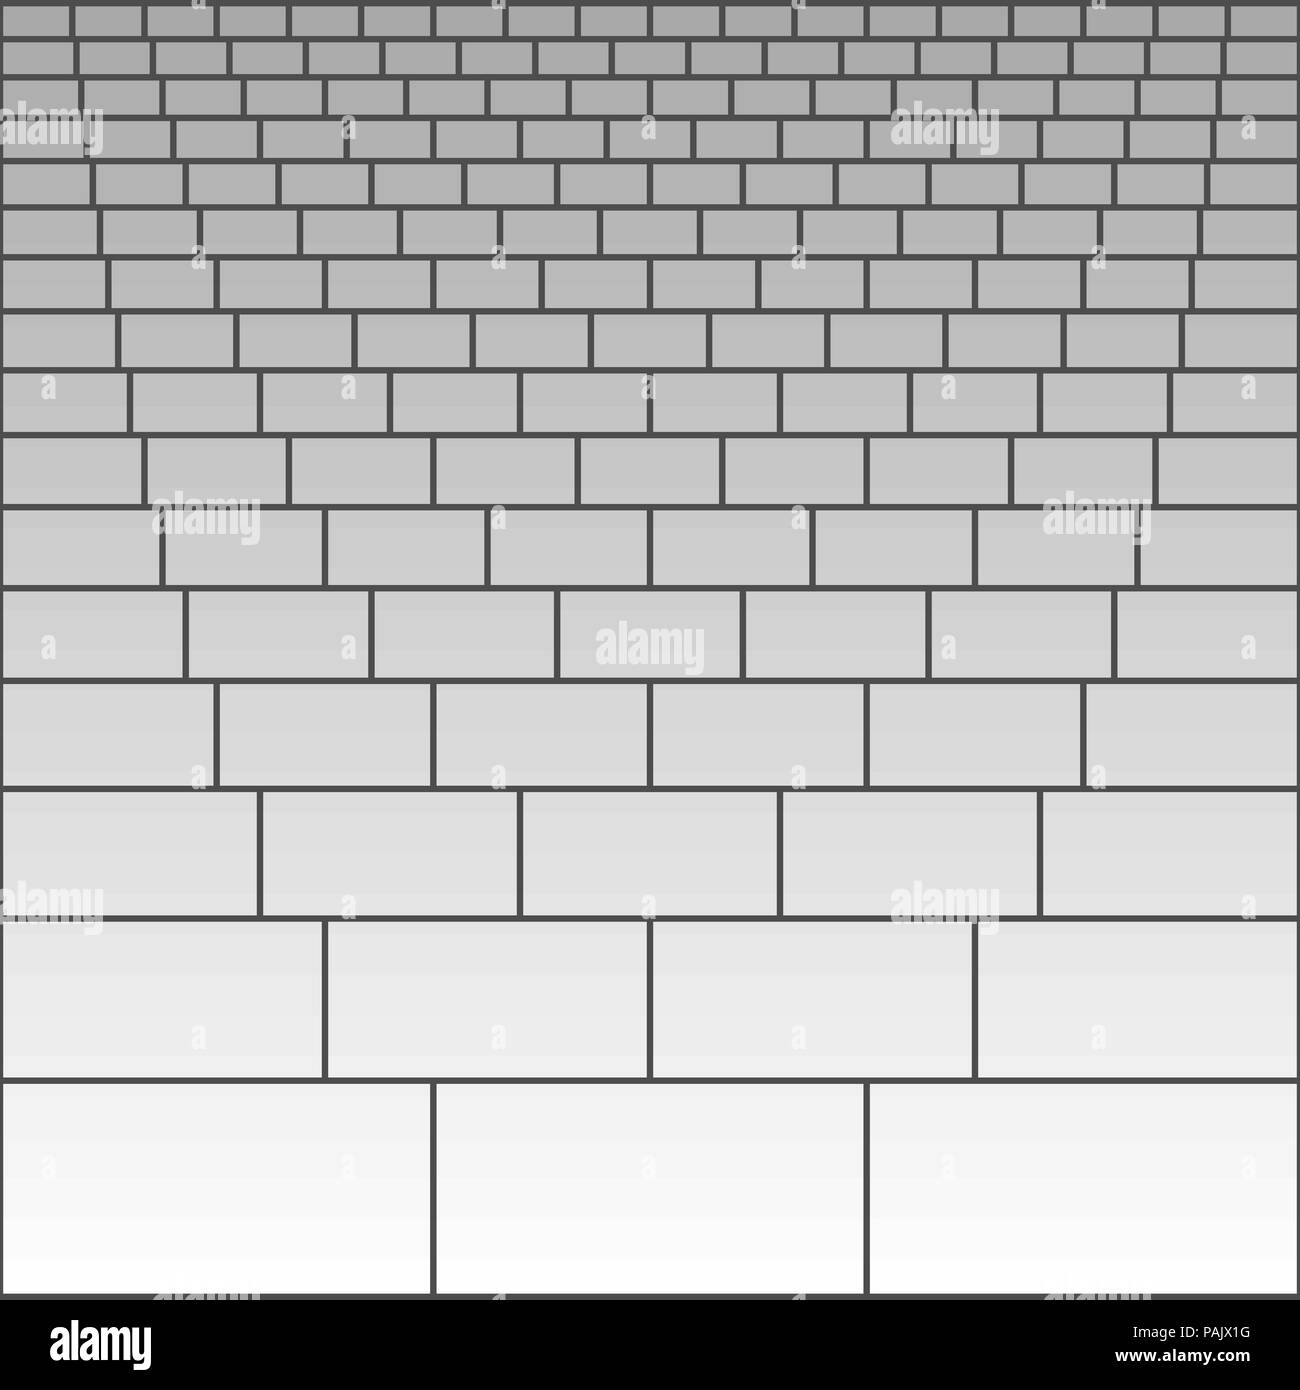 brick wall illustration pattern free download